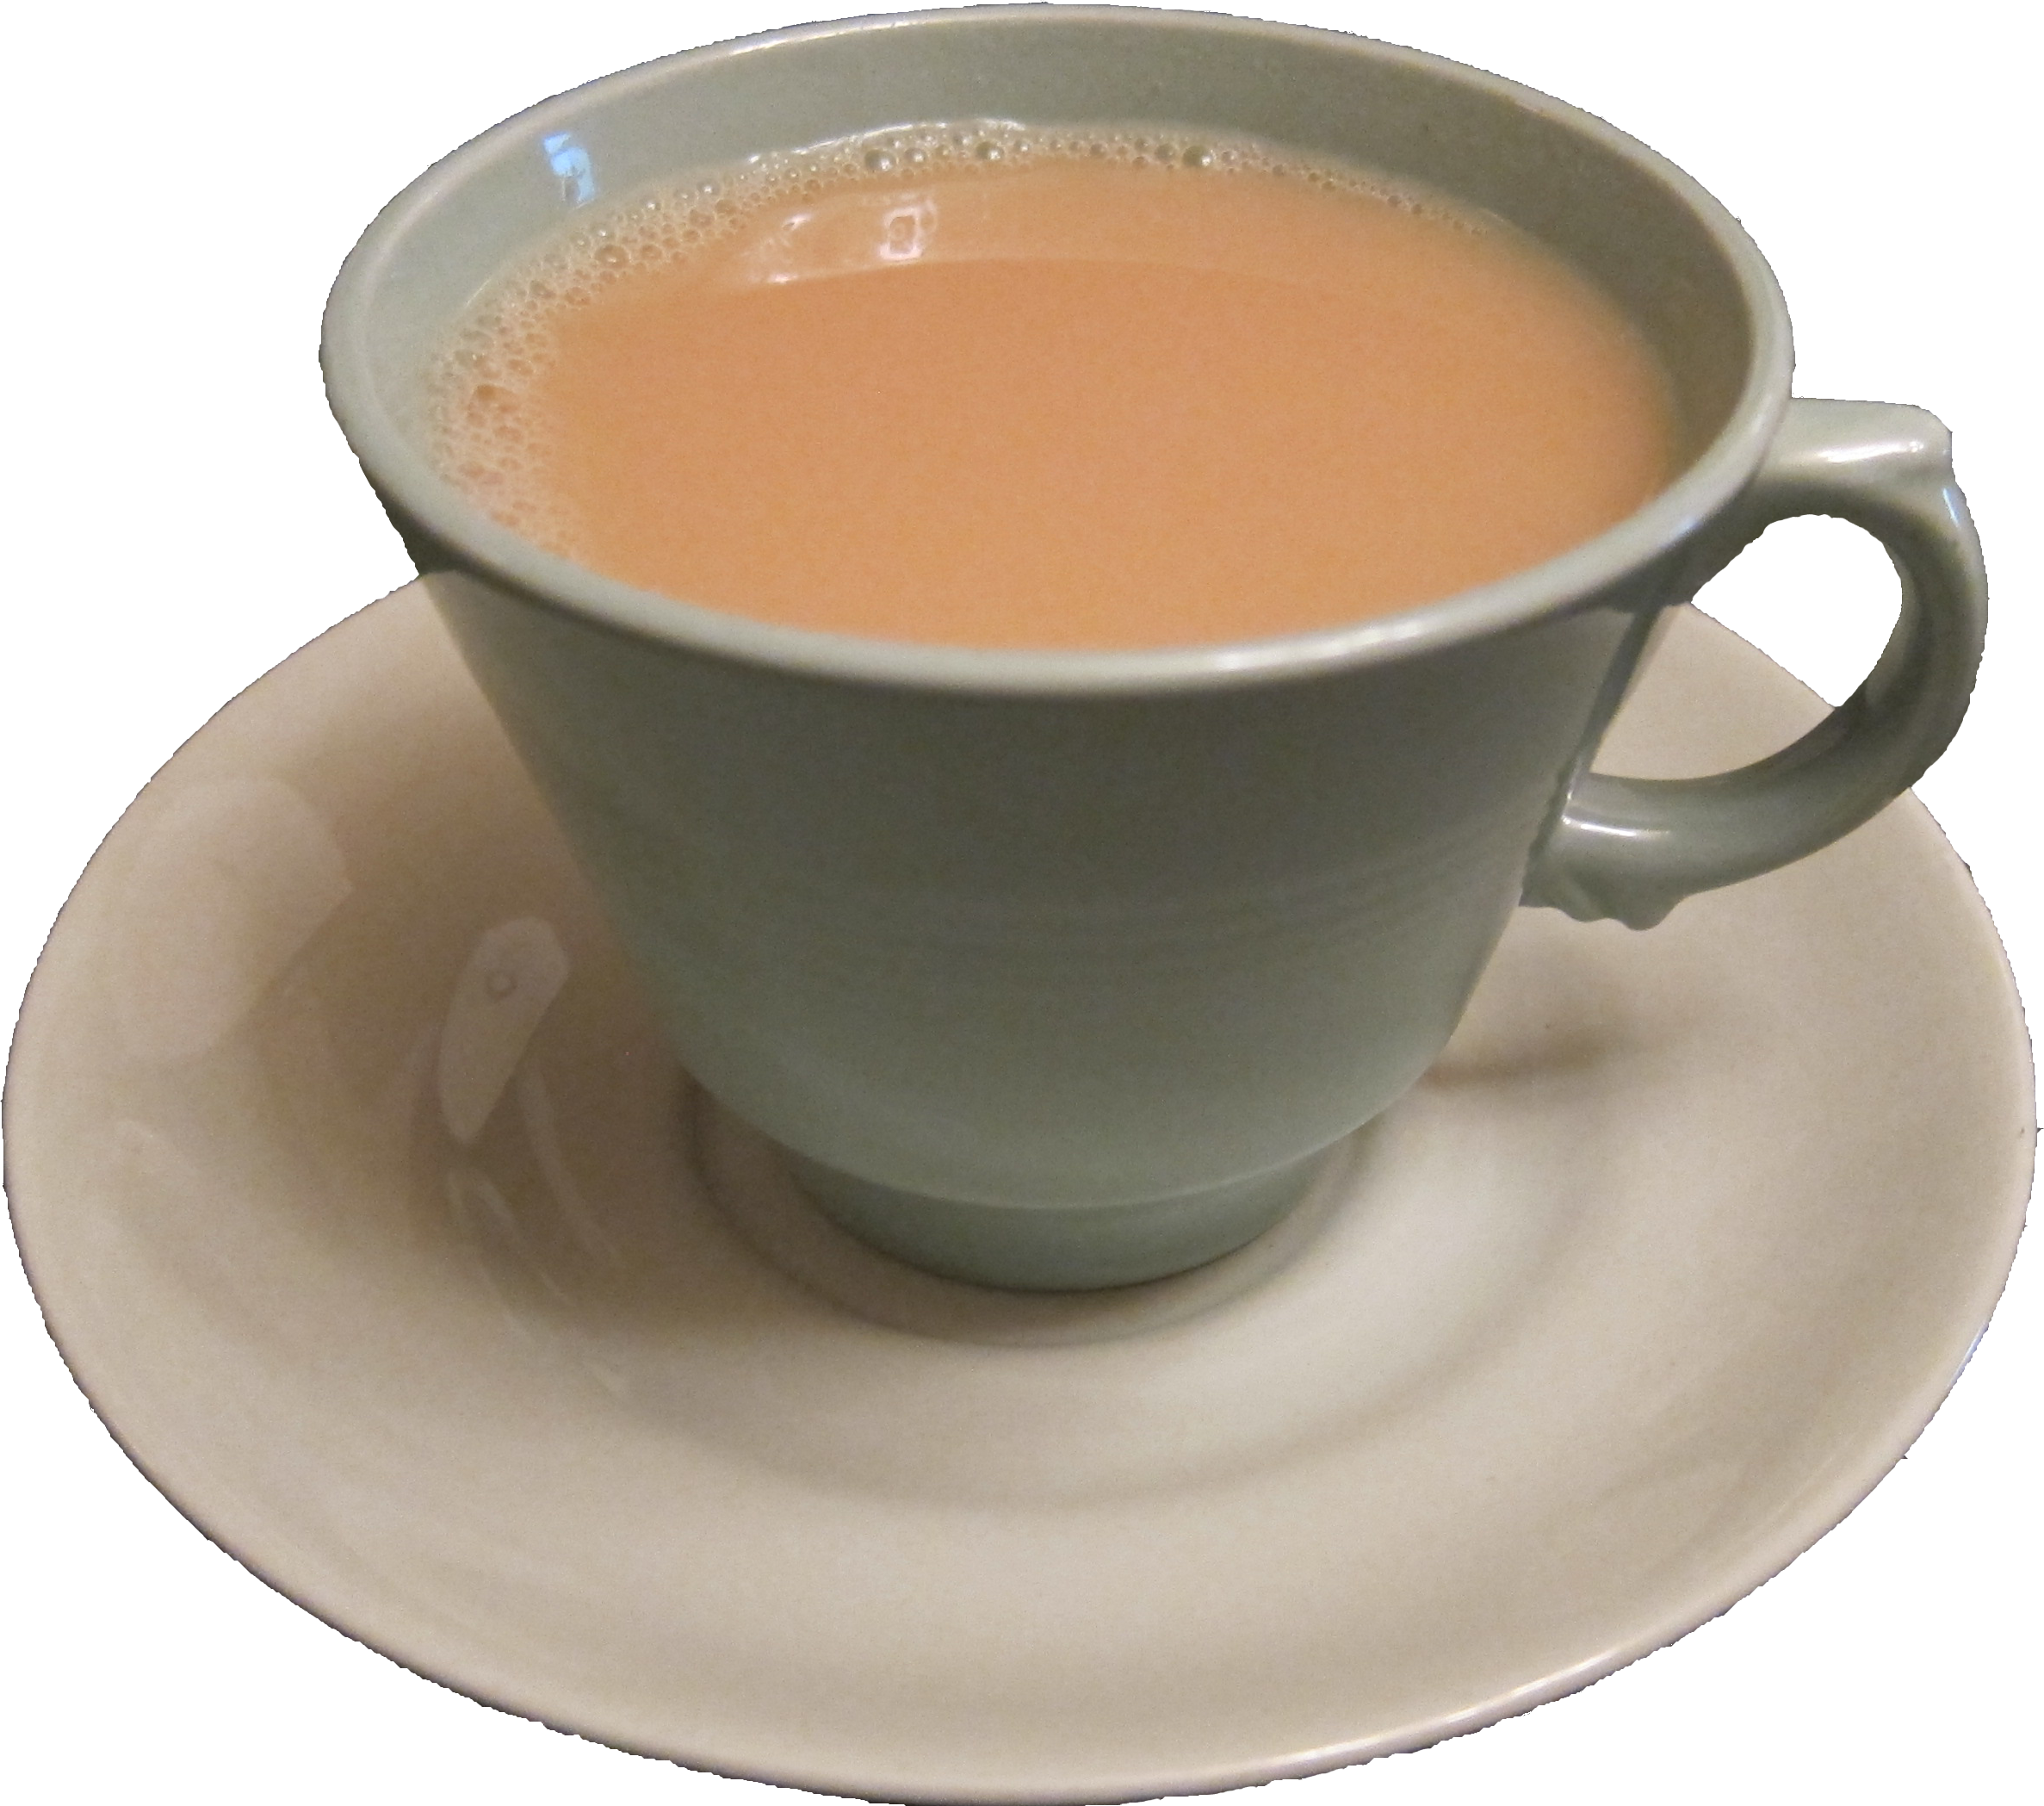 PNG Cup Of Tea Transparent Cup Of Tea.PNG Images. | PlusPNG